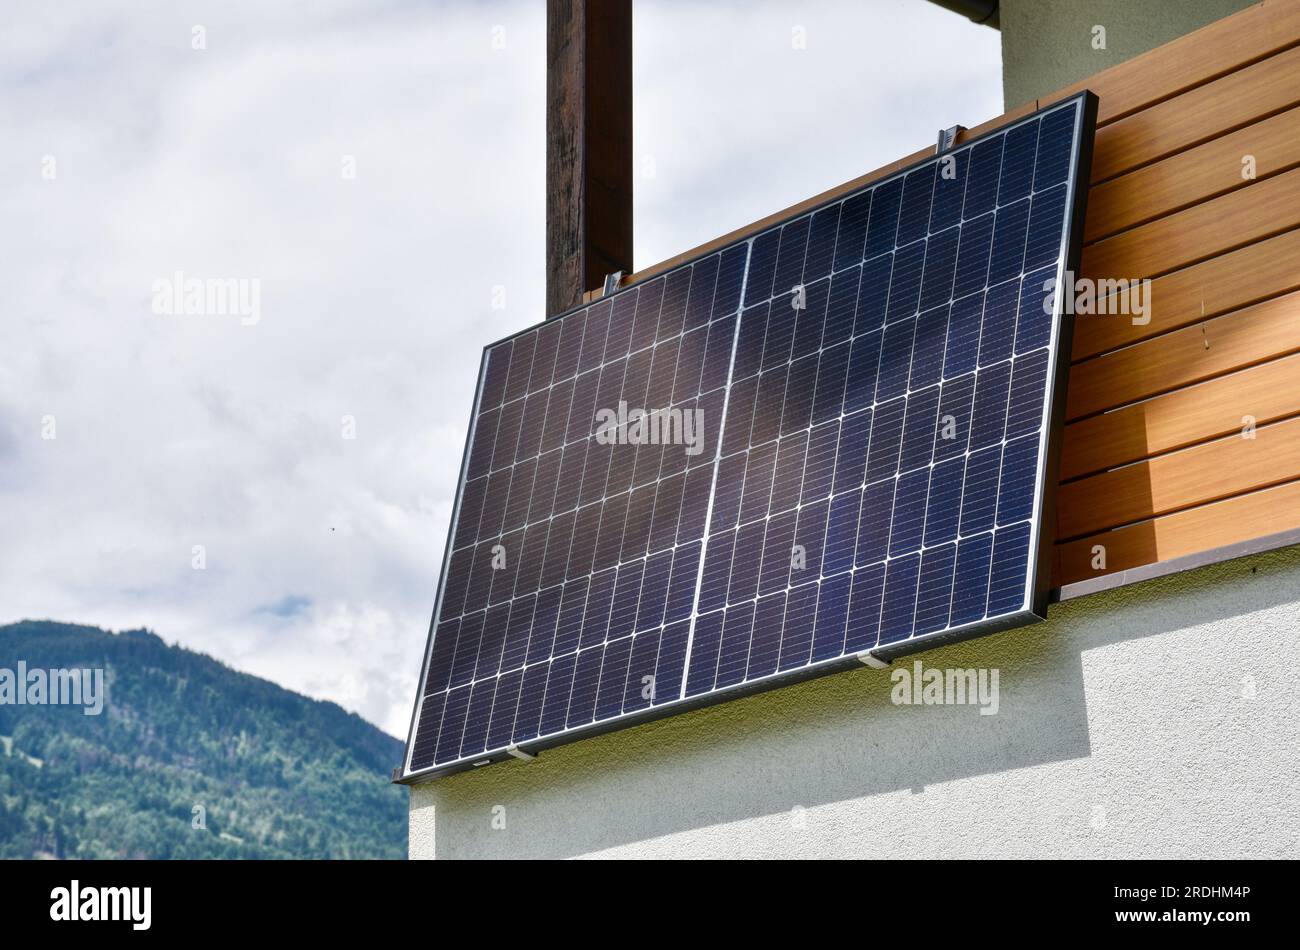 Balkonkraftwerk, Photovoltaik, Solarstrom, Solaranlage, Mini-Solaranlage, Panel, Solar, Solarenergie, Sonnenenergie, unabhängig, Strom, Solarzelle, Pa Stock Photo